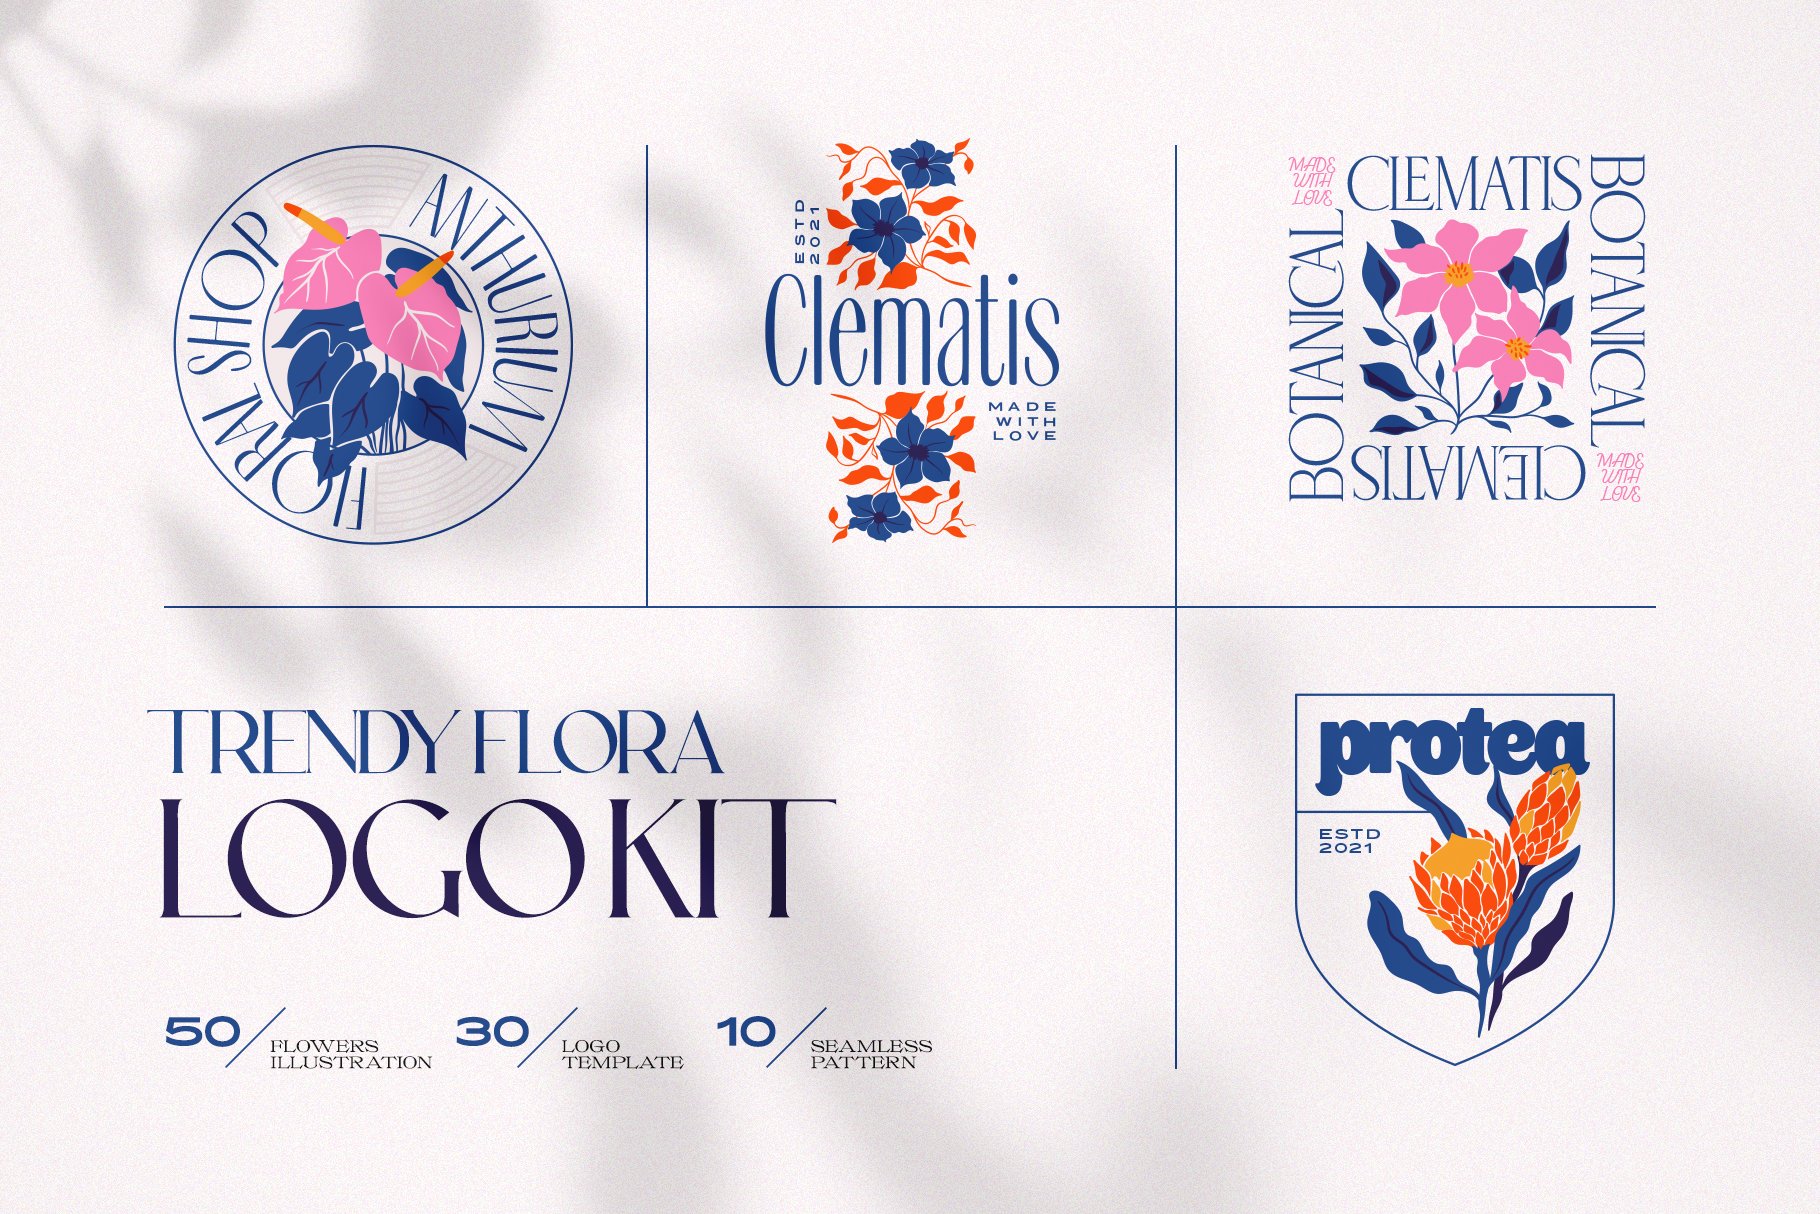 Trendy Flora Logo Kit cover image.